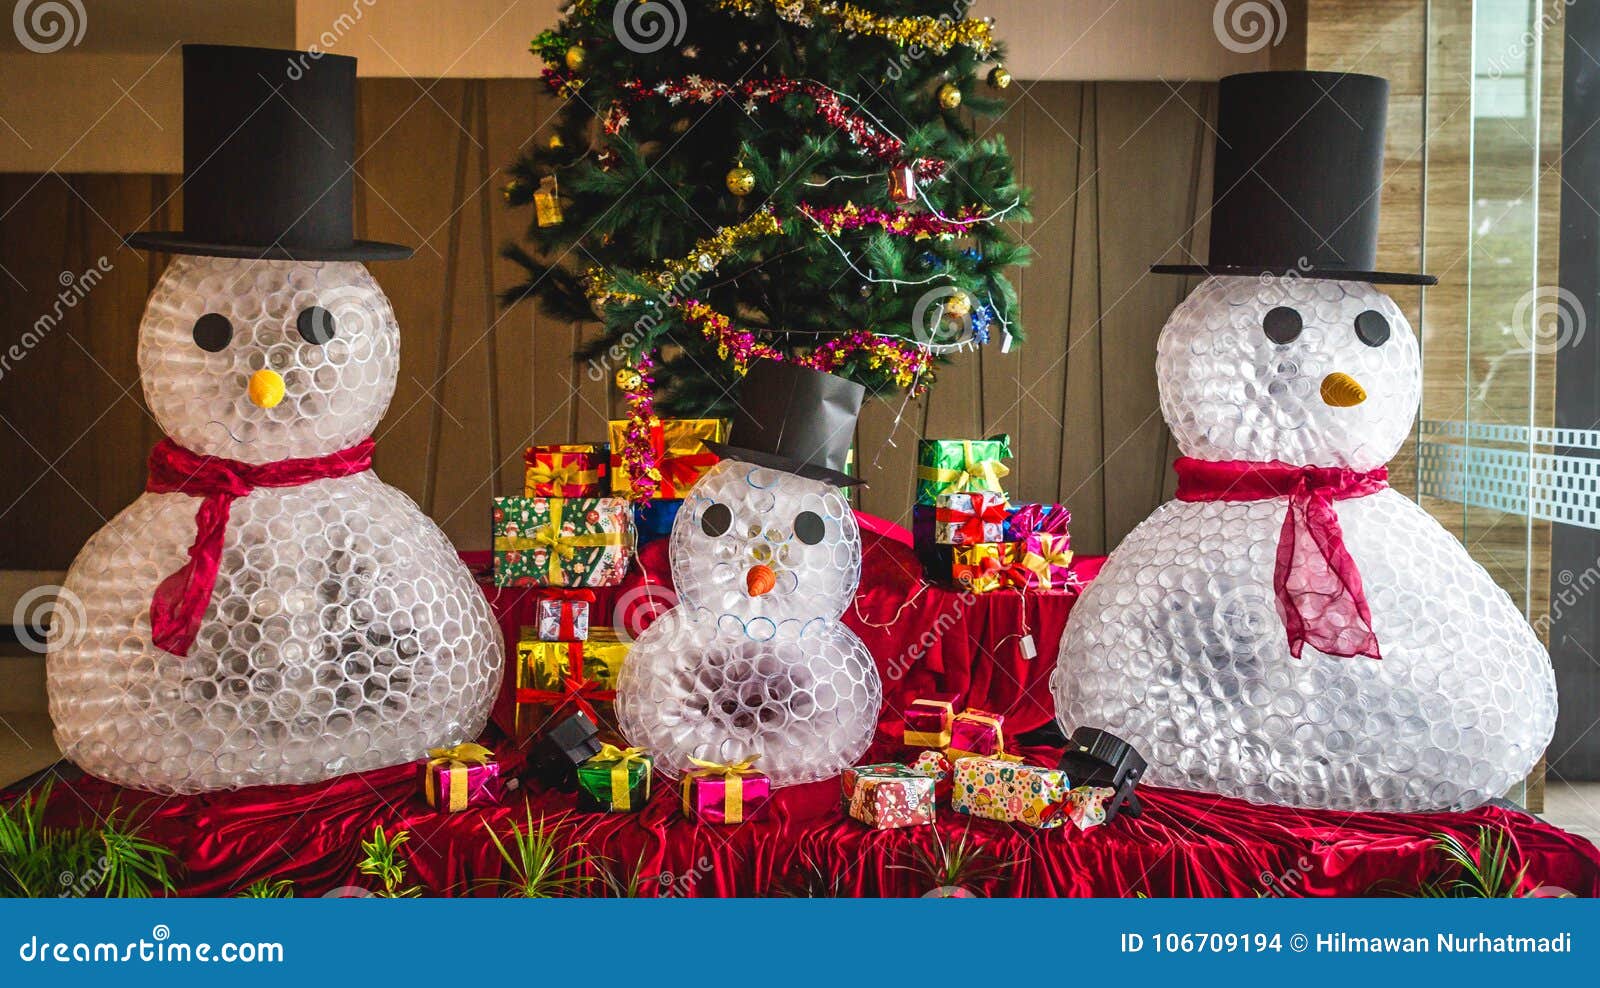 Three Snowman As Christmas Decoration Stock Photo - Image of ...